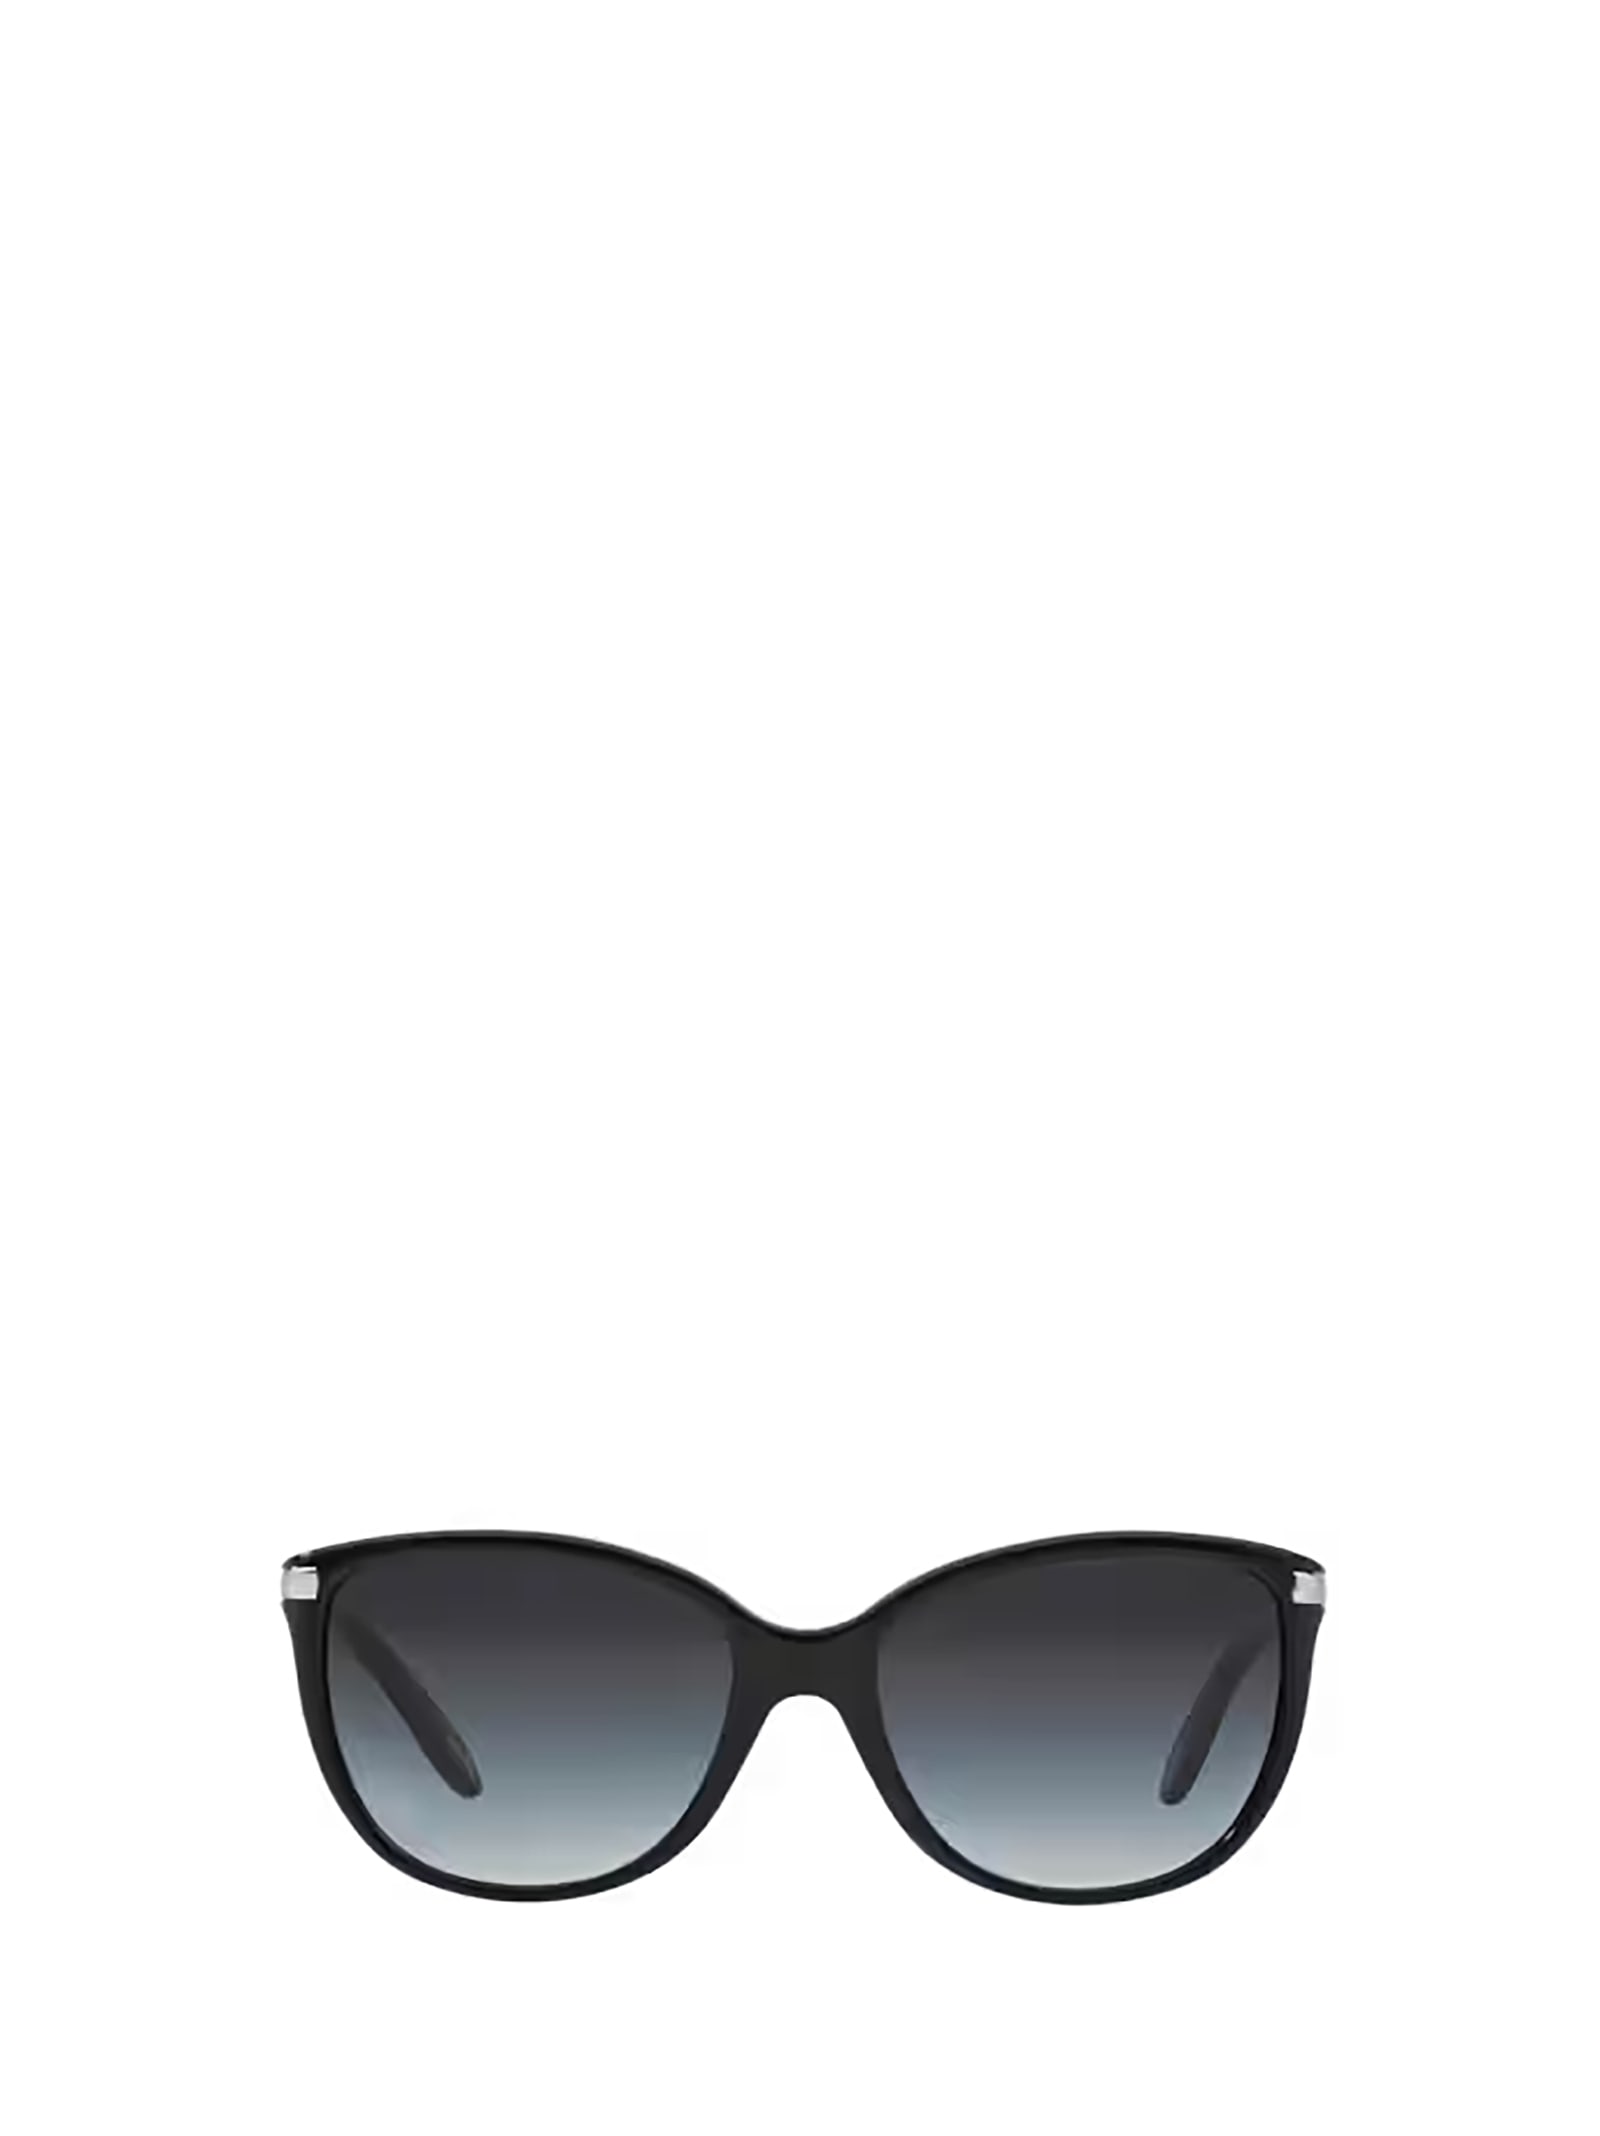 Polo Ralph Lauren Ra5160 Shiny Black Sunglasses